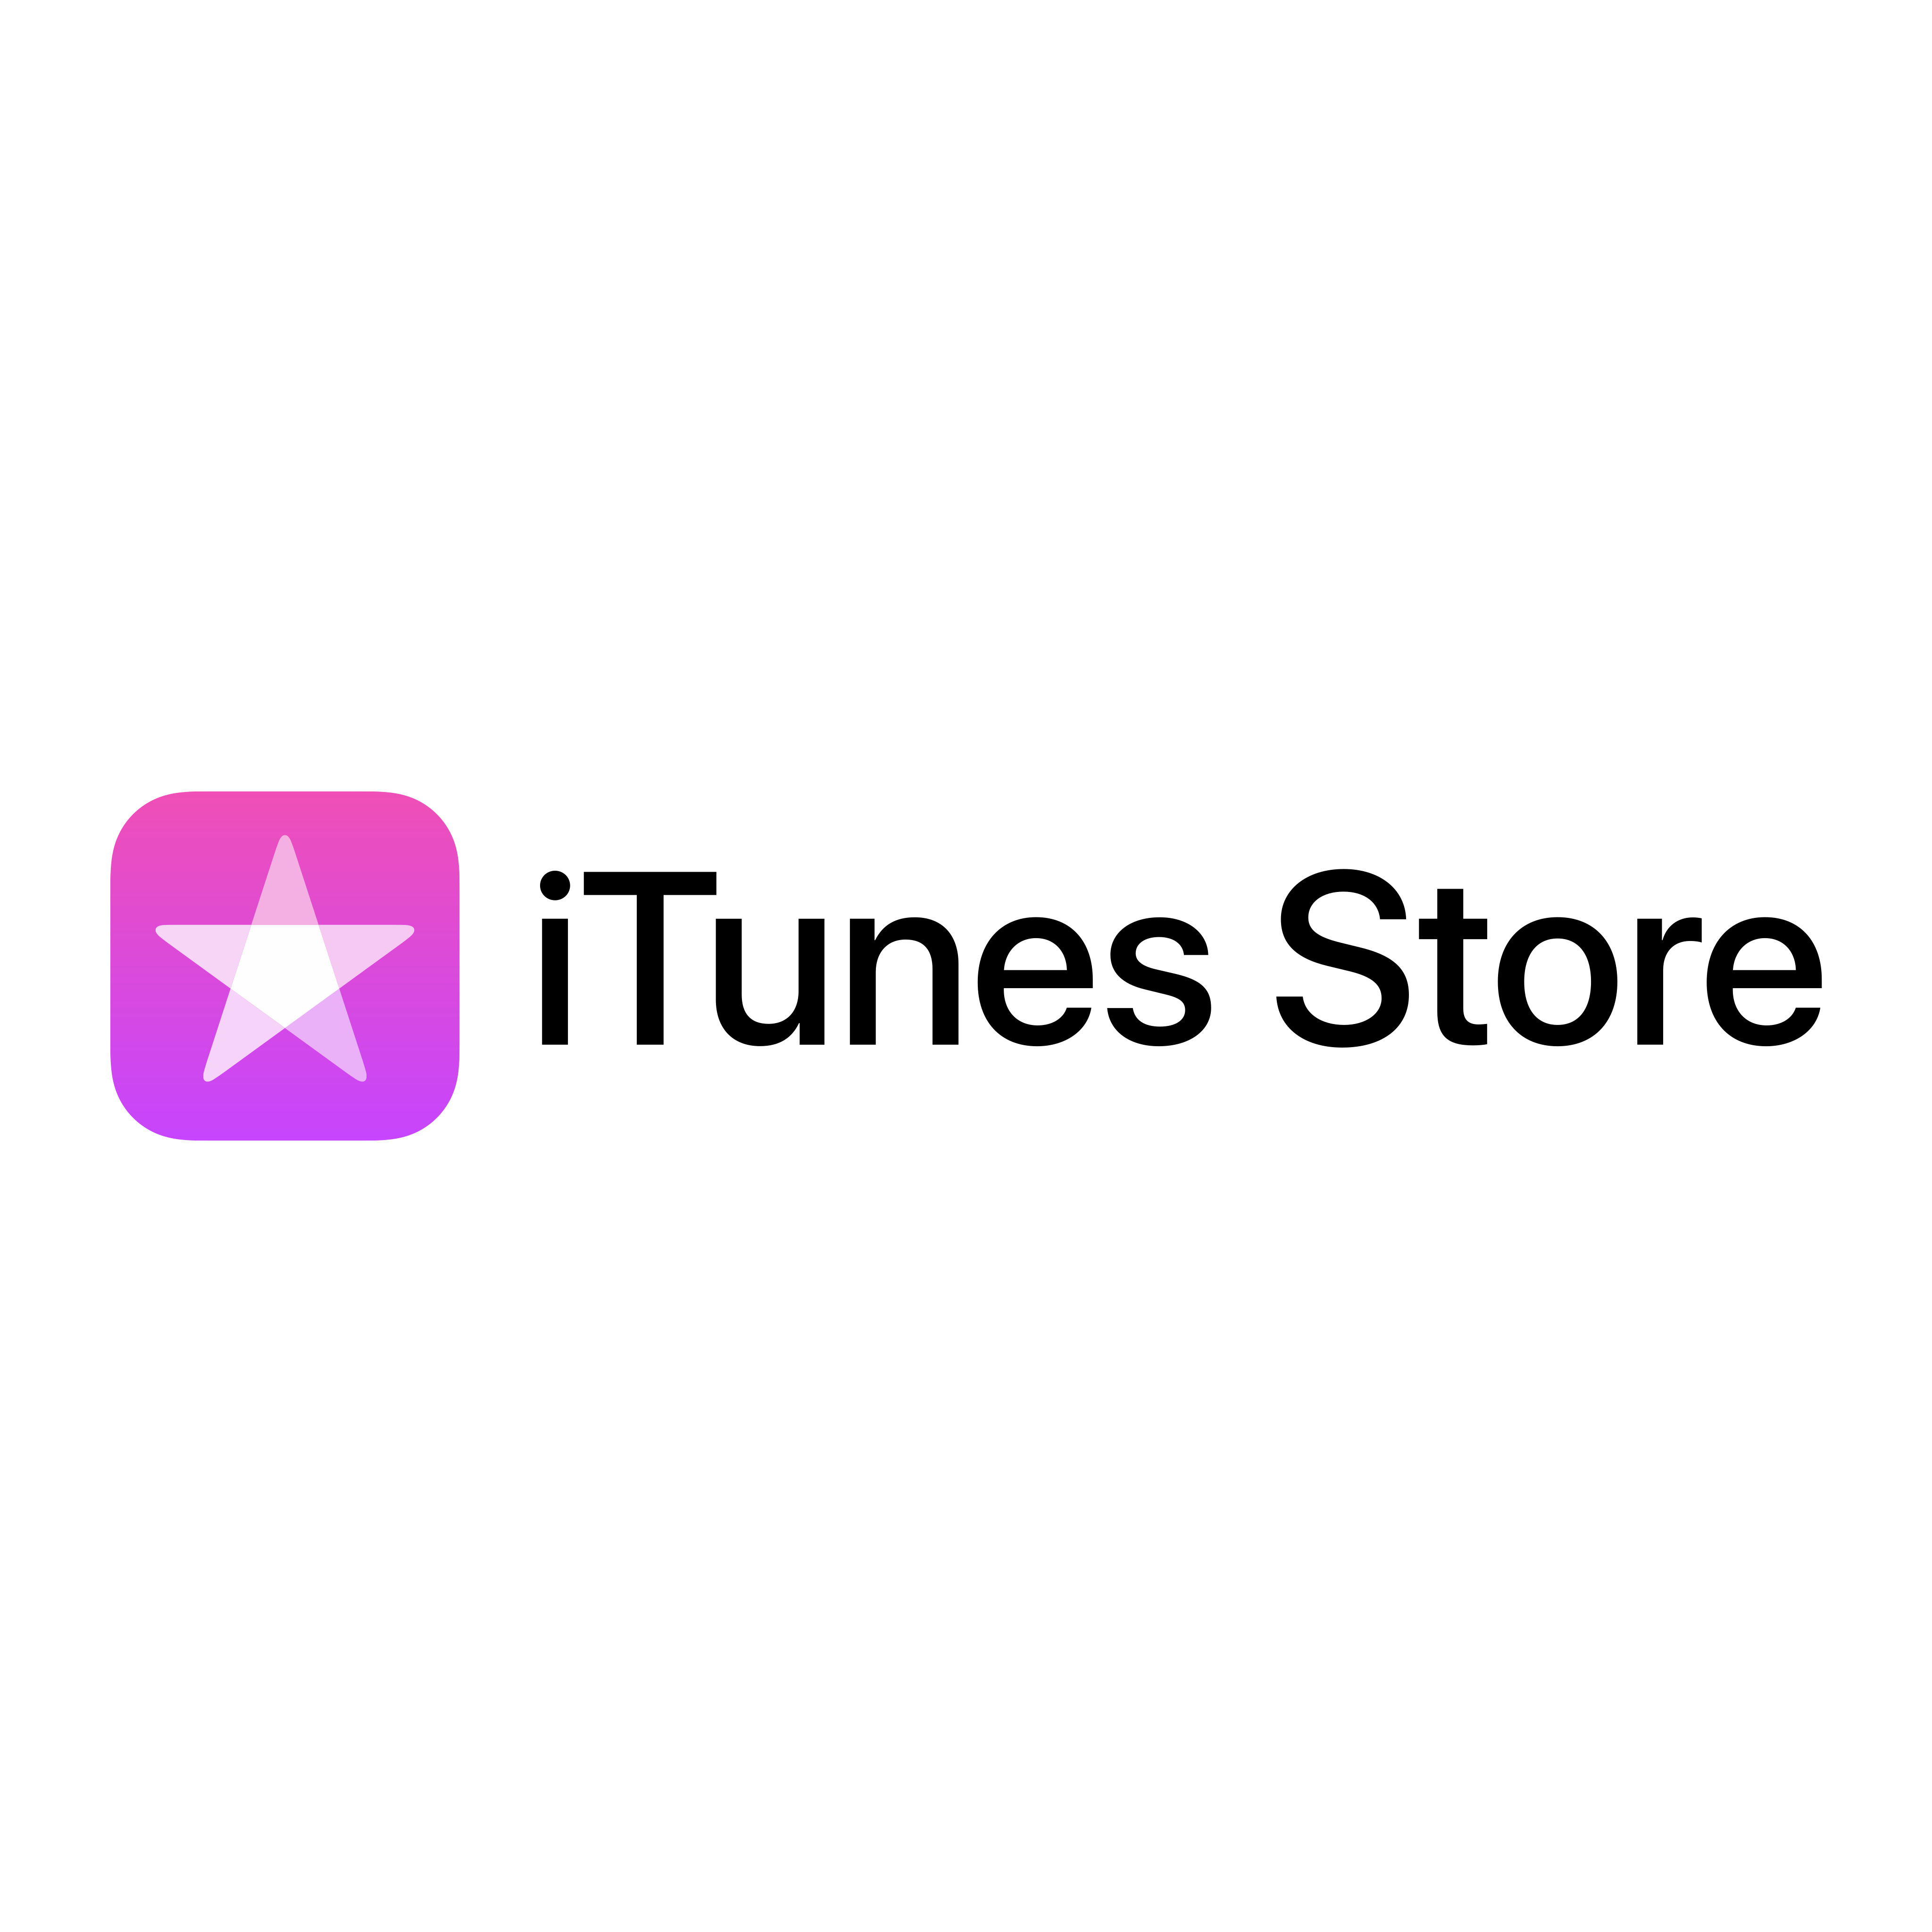 itunes store logo 0 - iTunes Store Logo